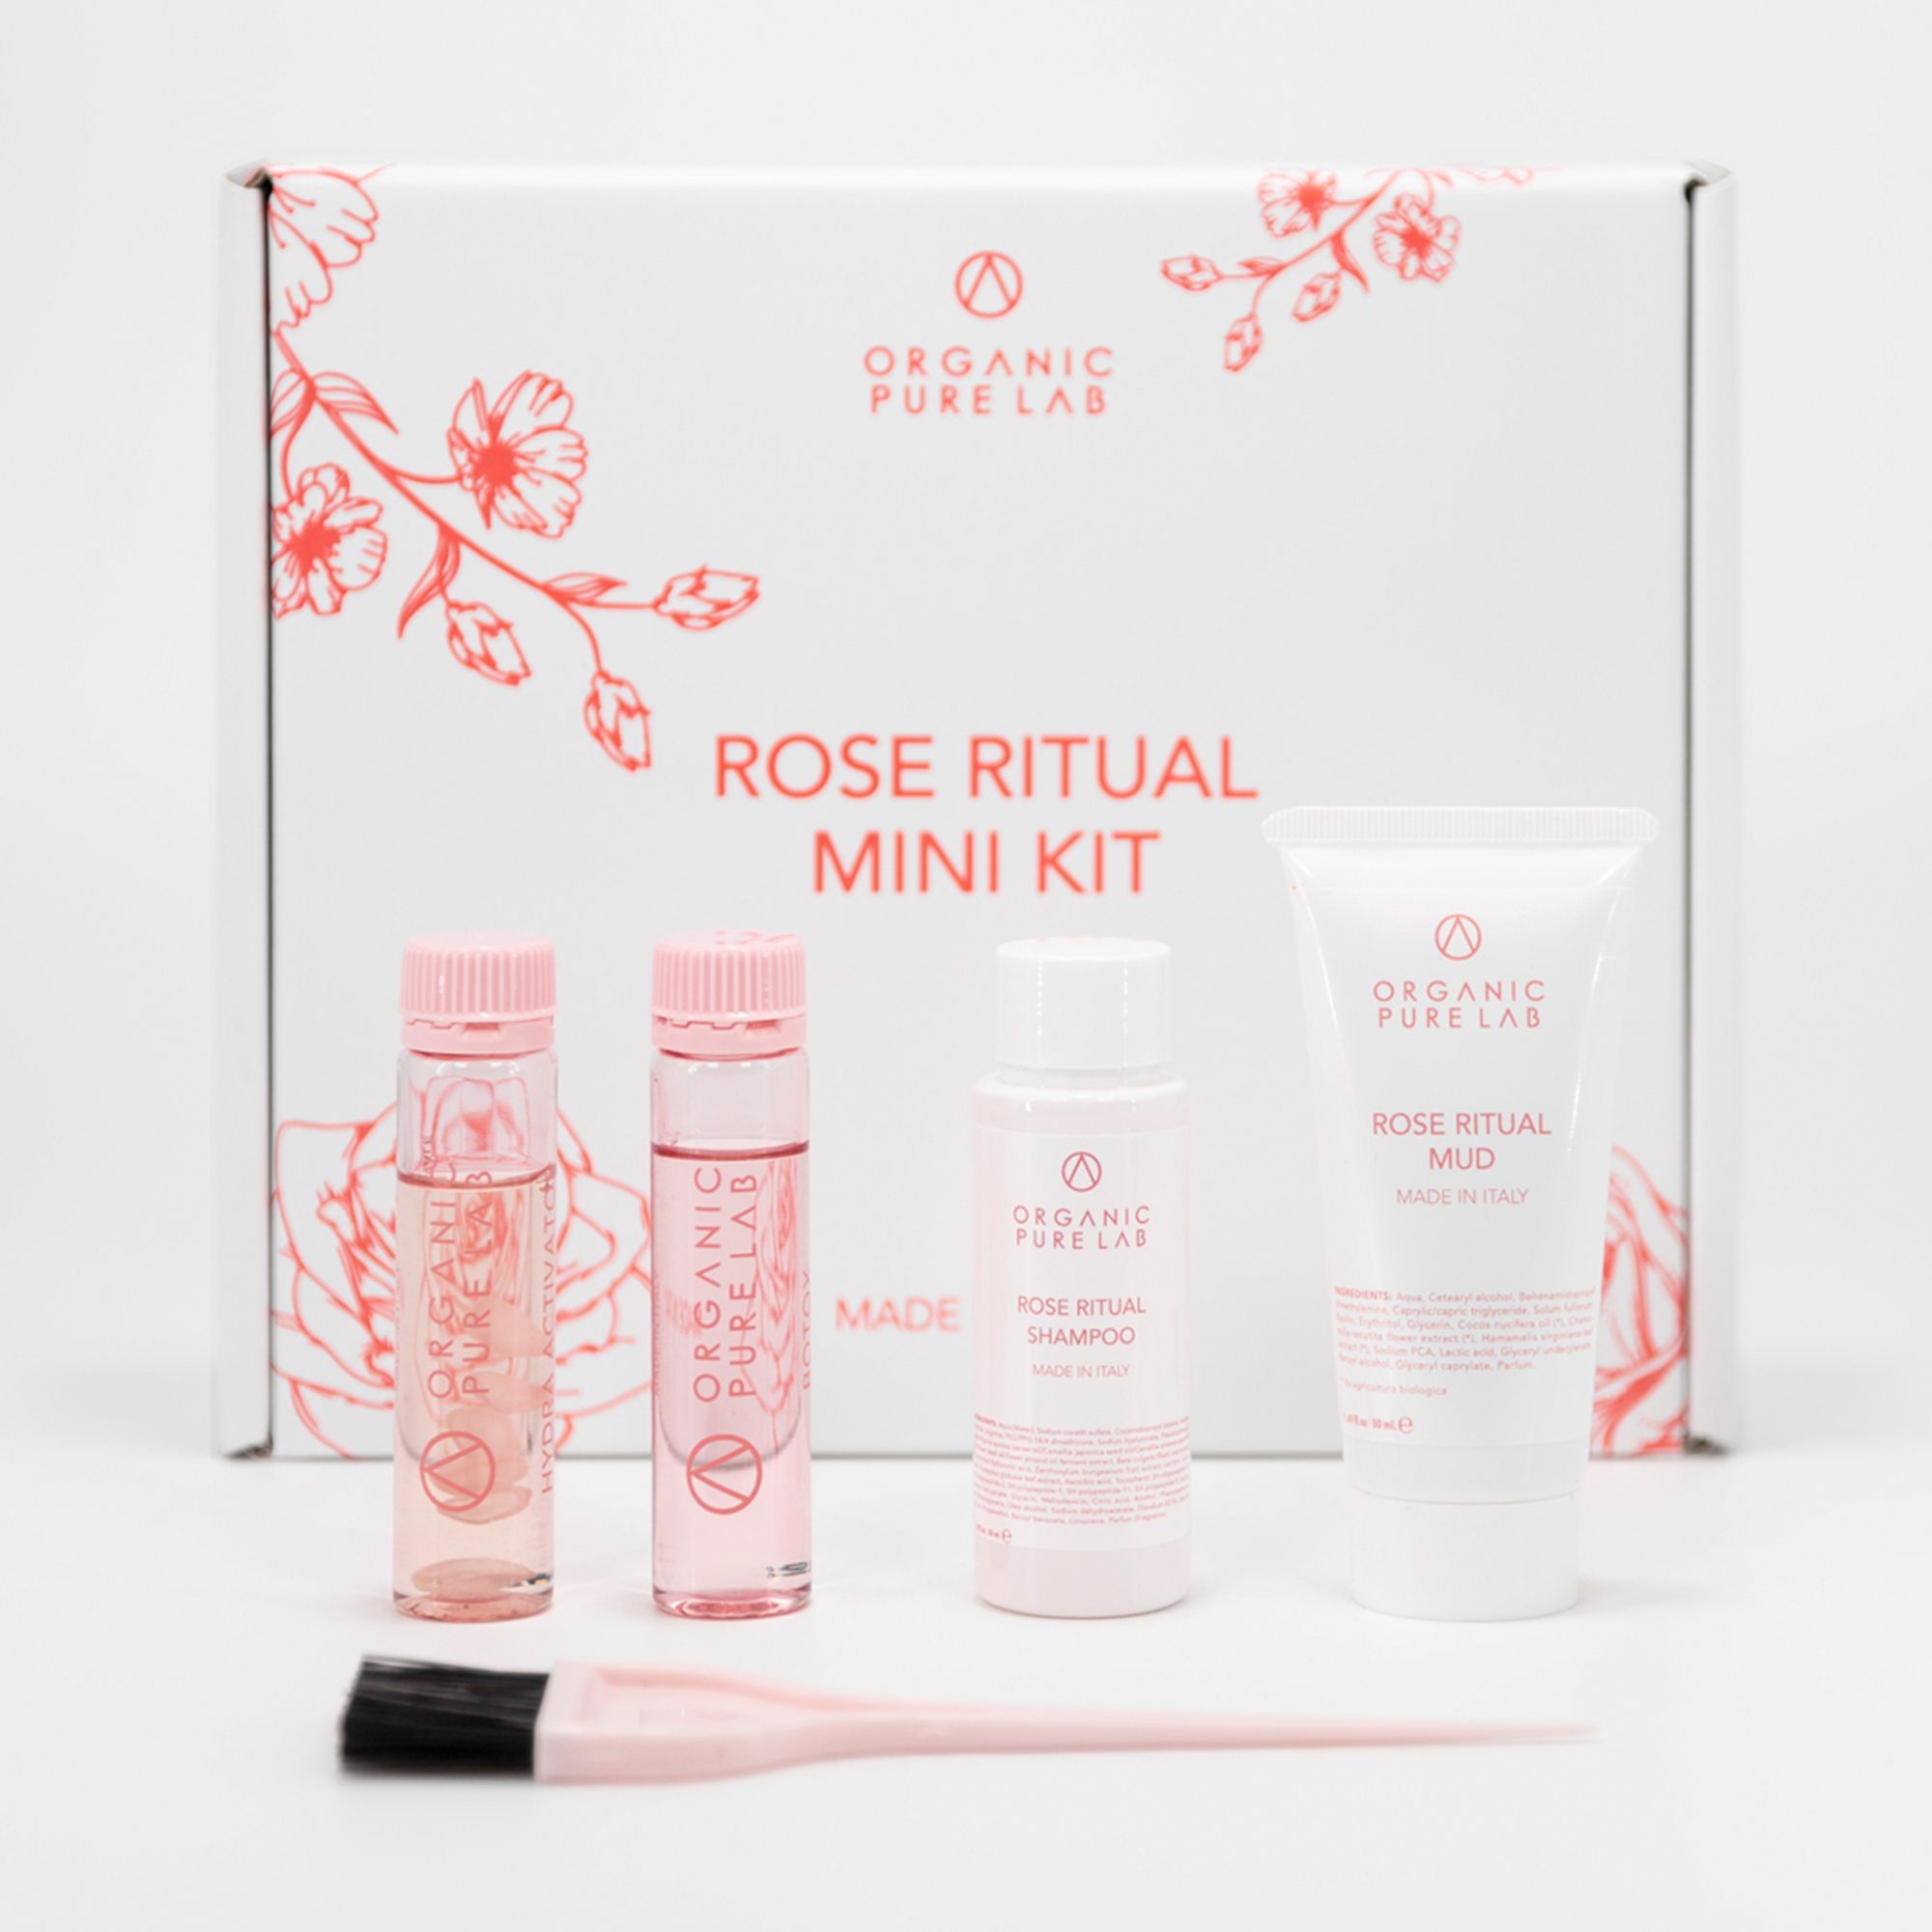 Kit Rose Ritual: 4 trattamenti cosmetici per capelli